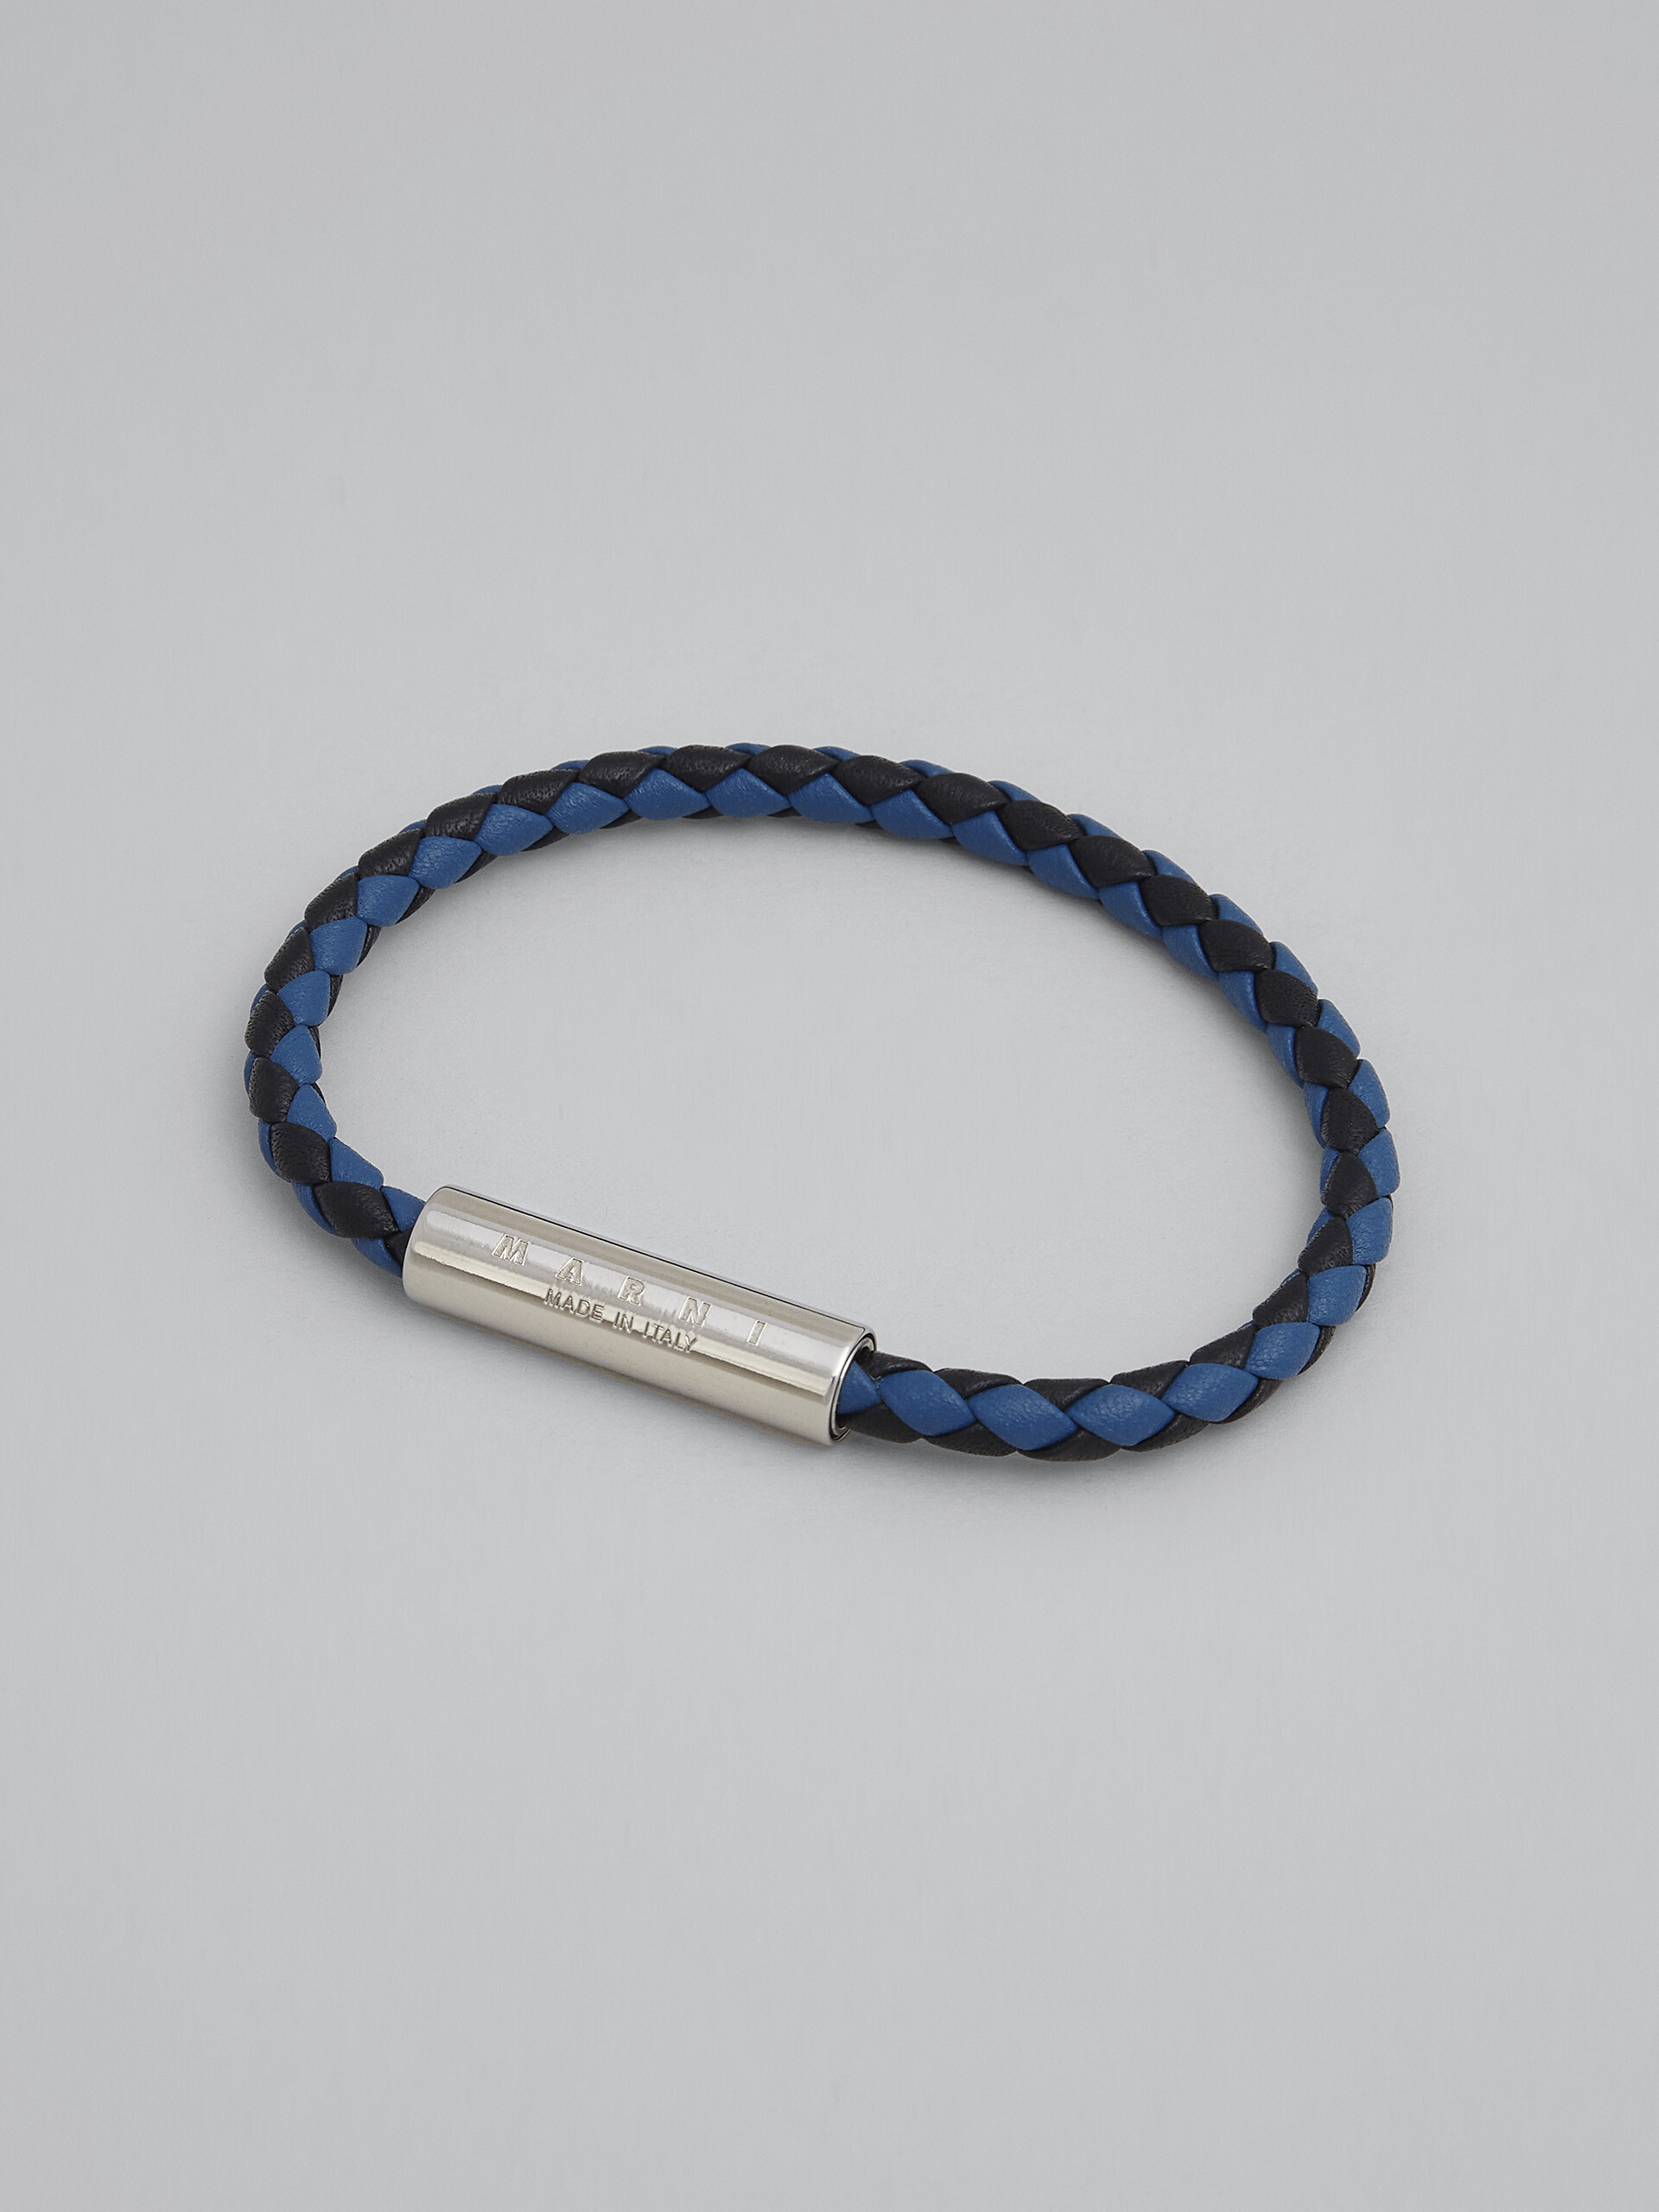 Black and blue braided leather bracelet - Bracelets - Image 4